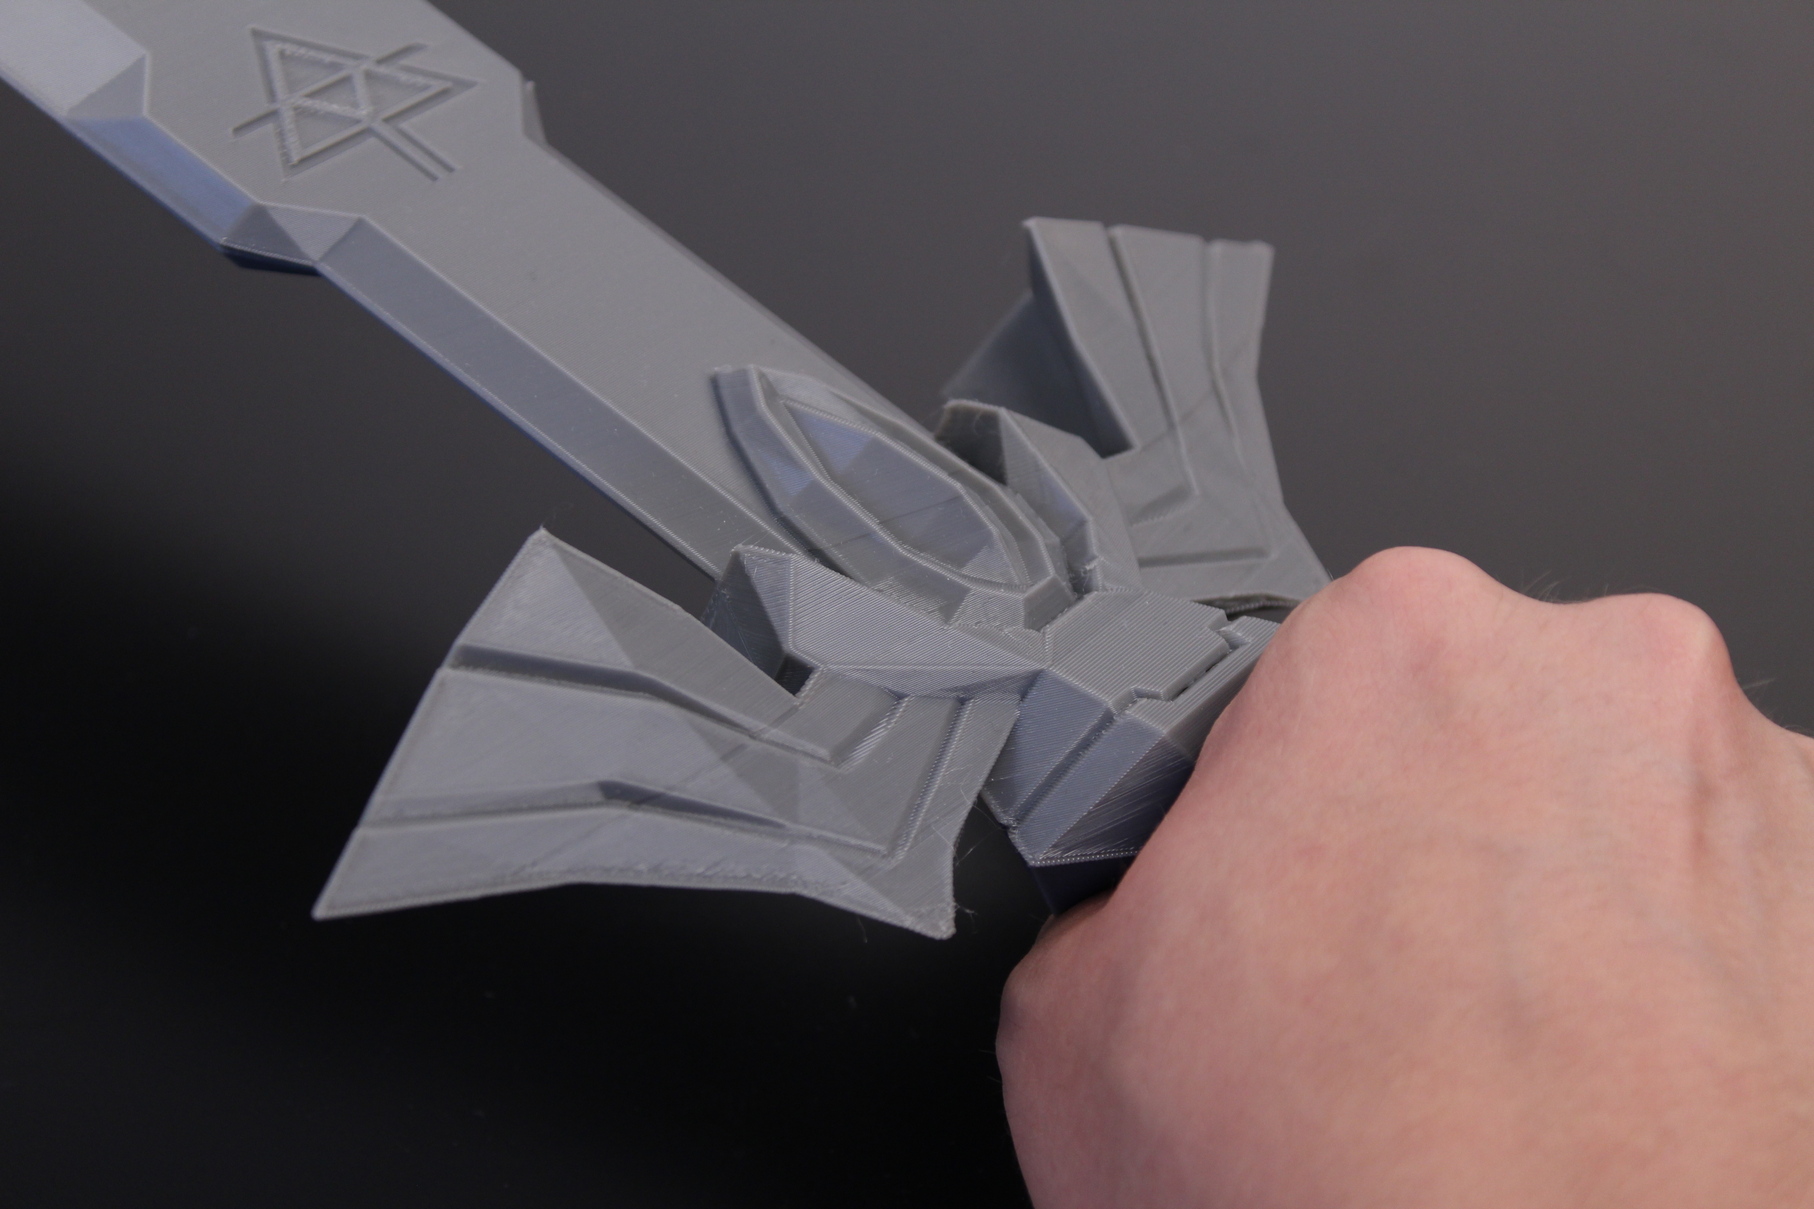 Master Sword printed on Creality CR 30 3DPrintMill 8 | Creality 3DPrintMill (CR-30) Review: Belt Printer for Batch 3D Printing